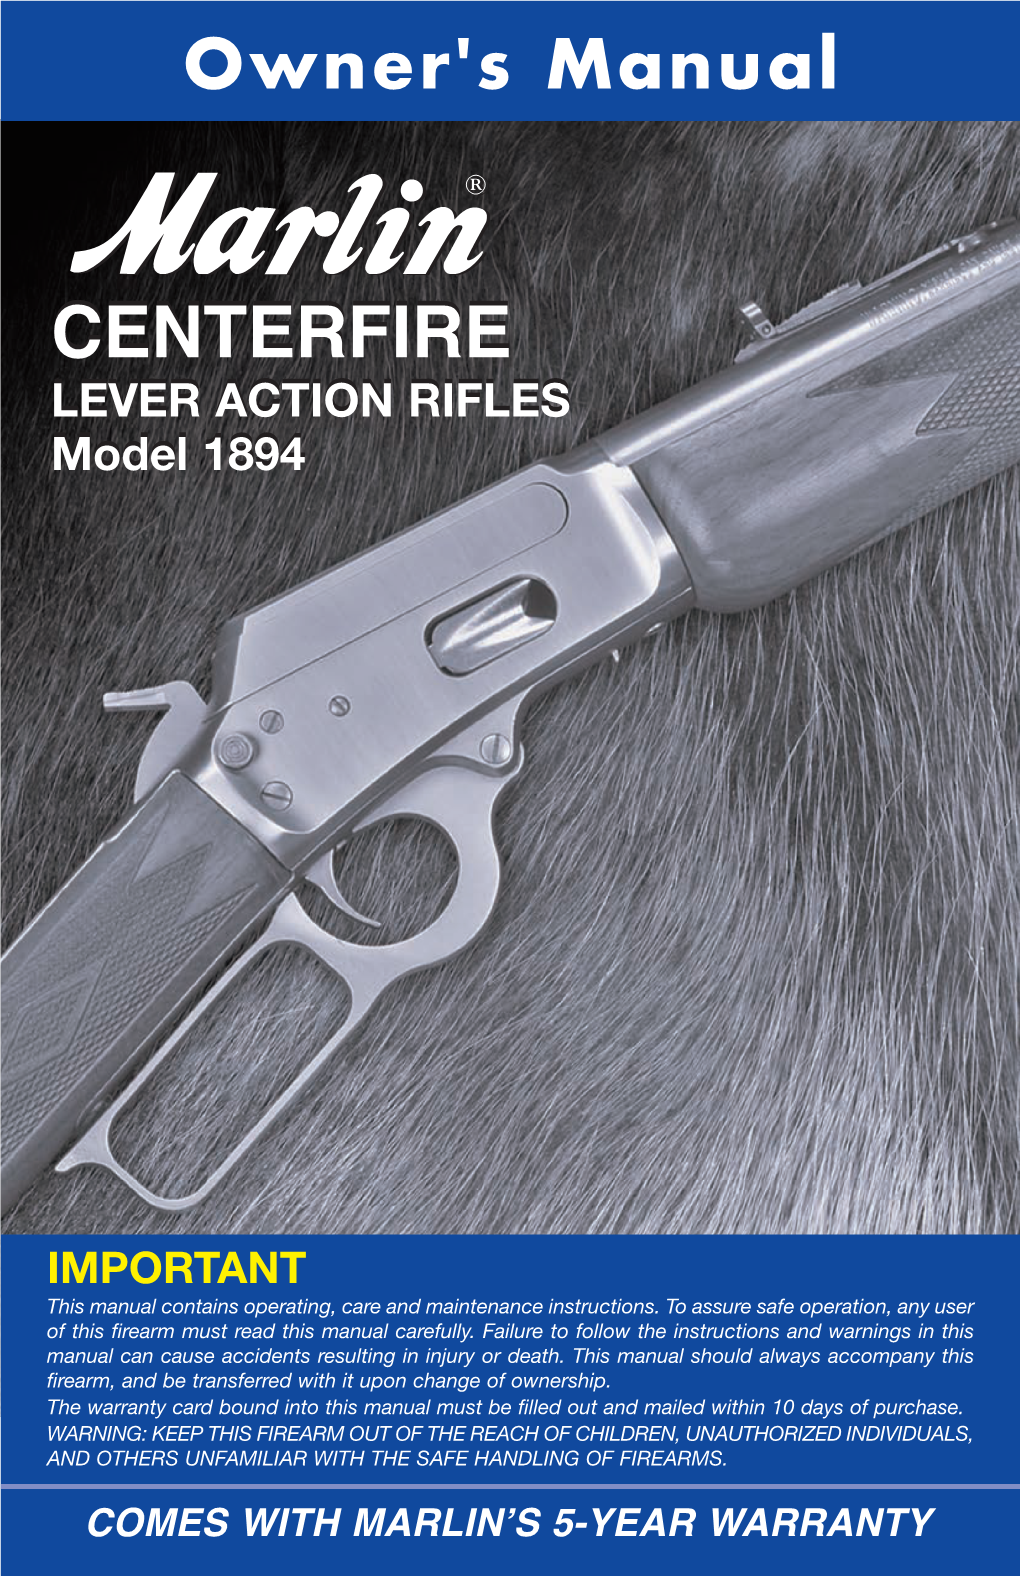 Model 1894 Centerfire Lever Action Rifles